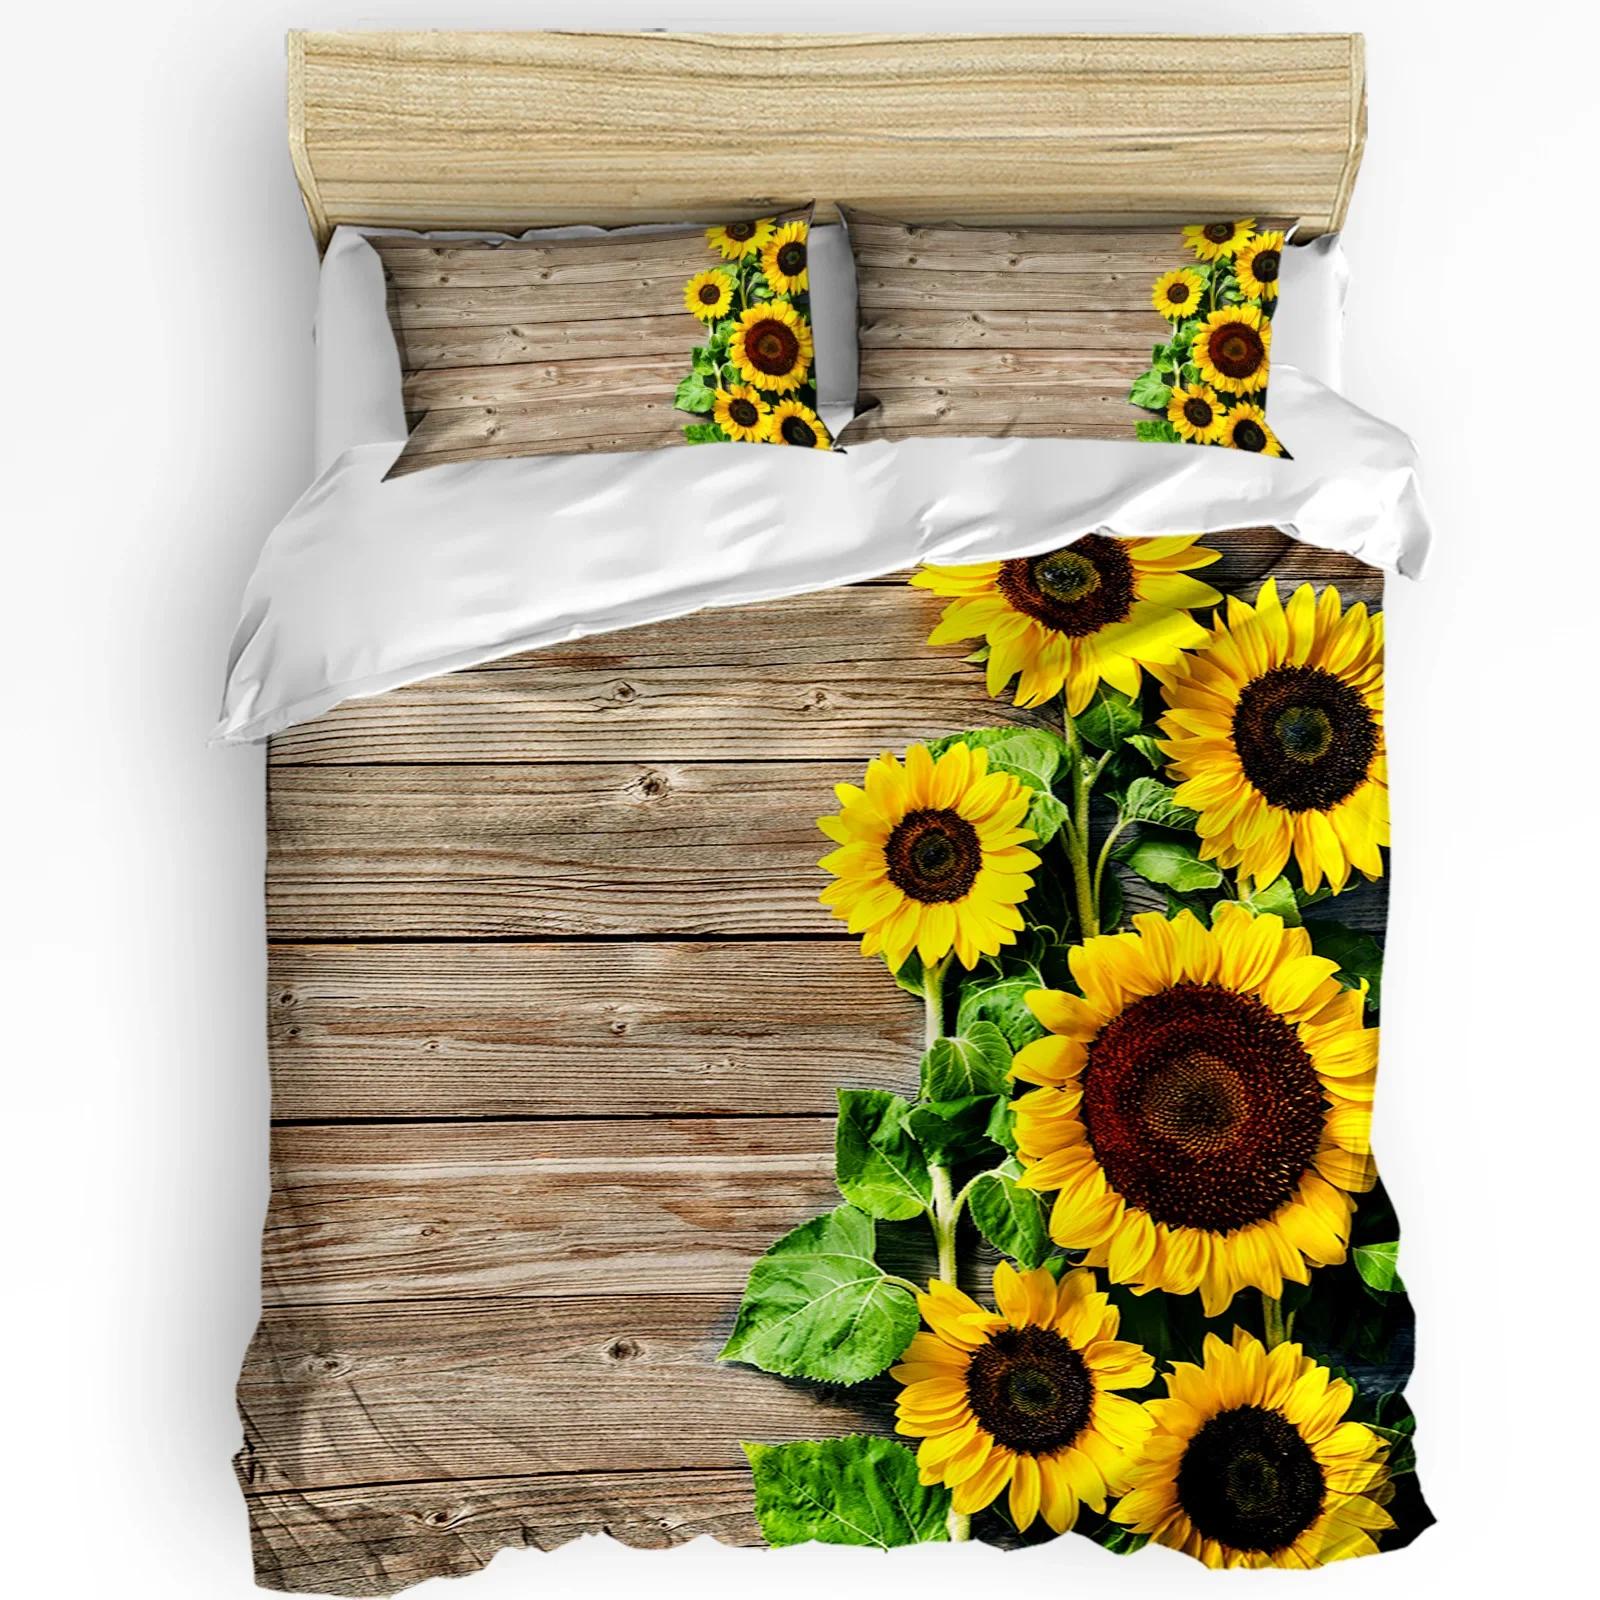 3pcs Bedding Set Sunflowers Wood Rustic Home Textile Duvet Cover Pillow Case Boy Kid Teen Girl Bedding Covers Set